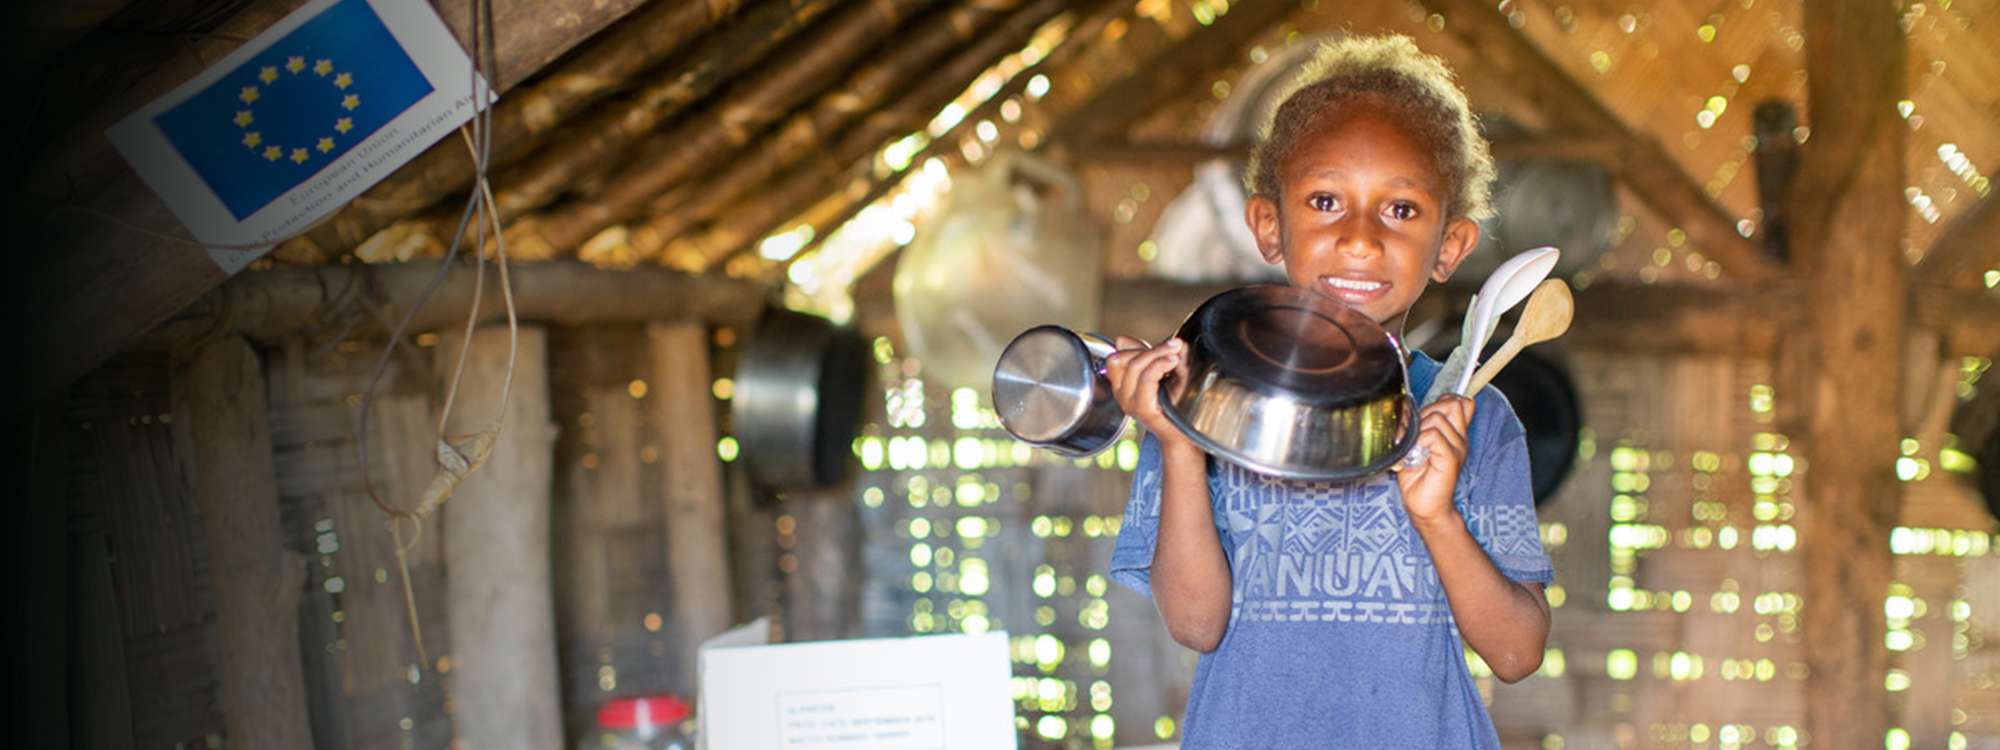 child holding a kitchen set and smiling inside a shelter on Vanuatu